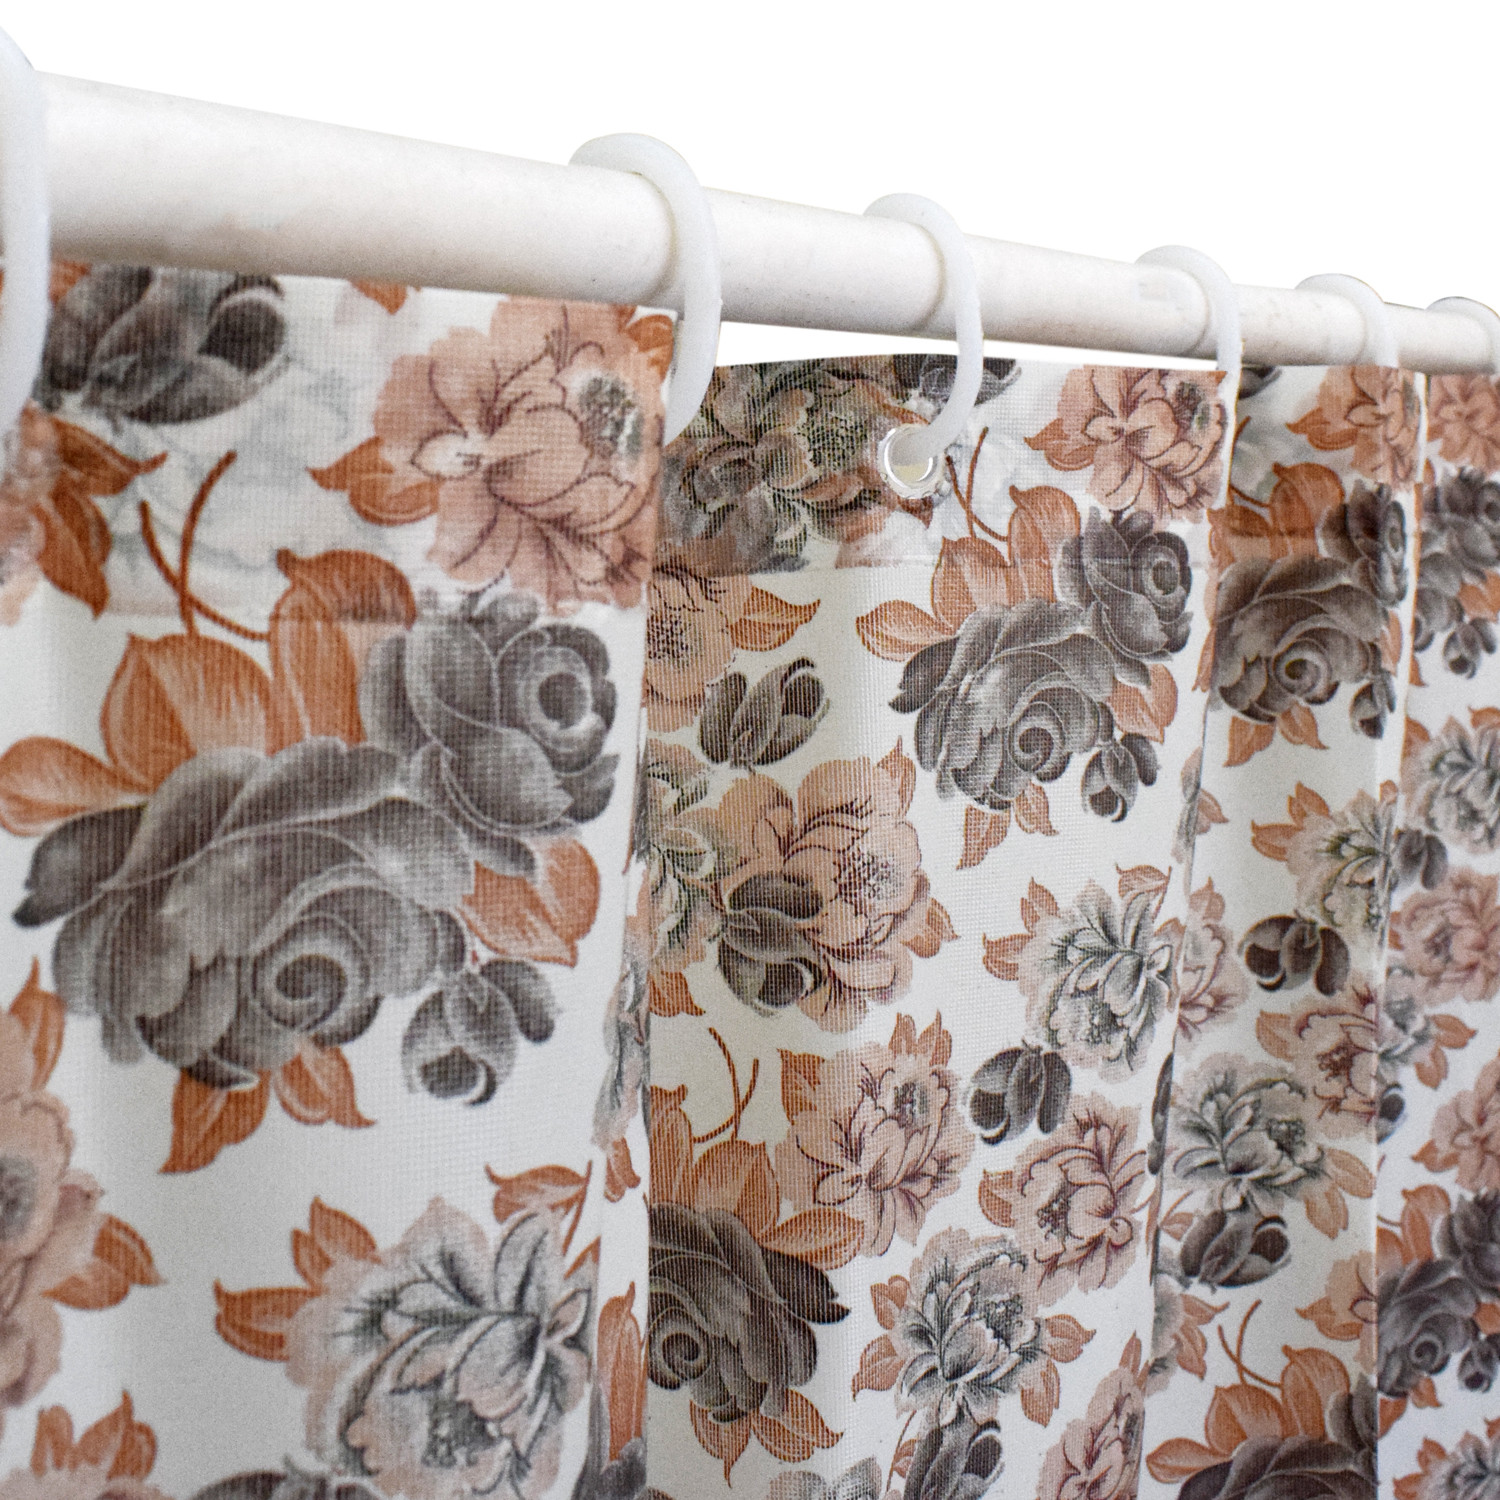 Kuber Industries Flower Printed Stain Resistant, No Odor, Waterproof PVC AC/Shower Curtain With Hooks,7 Feet (Brown)